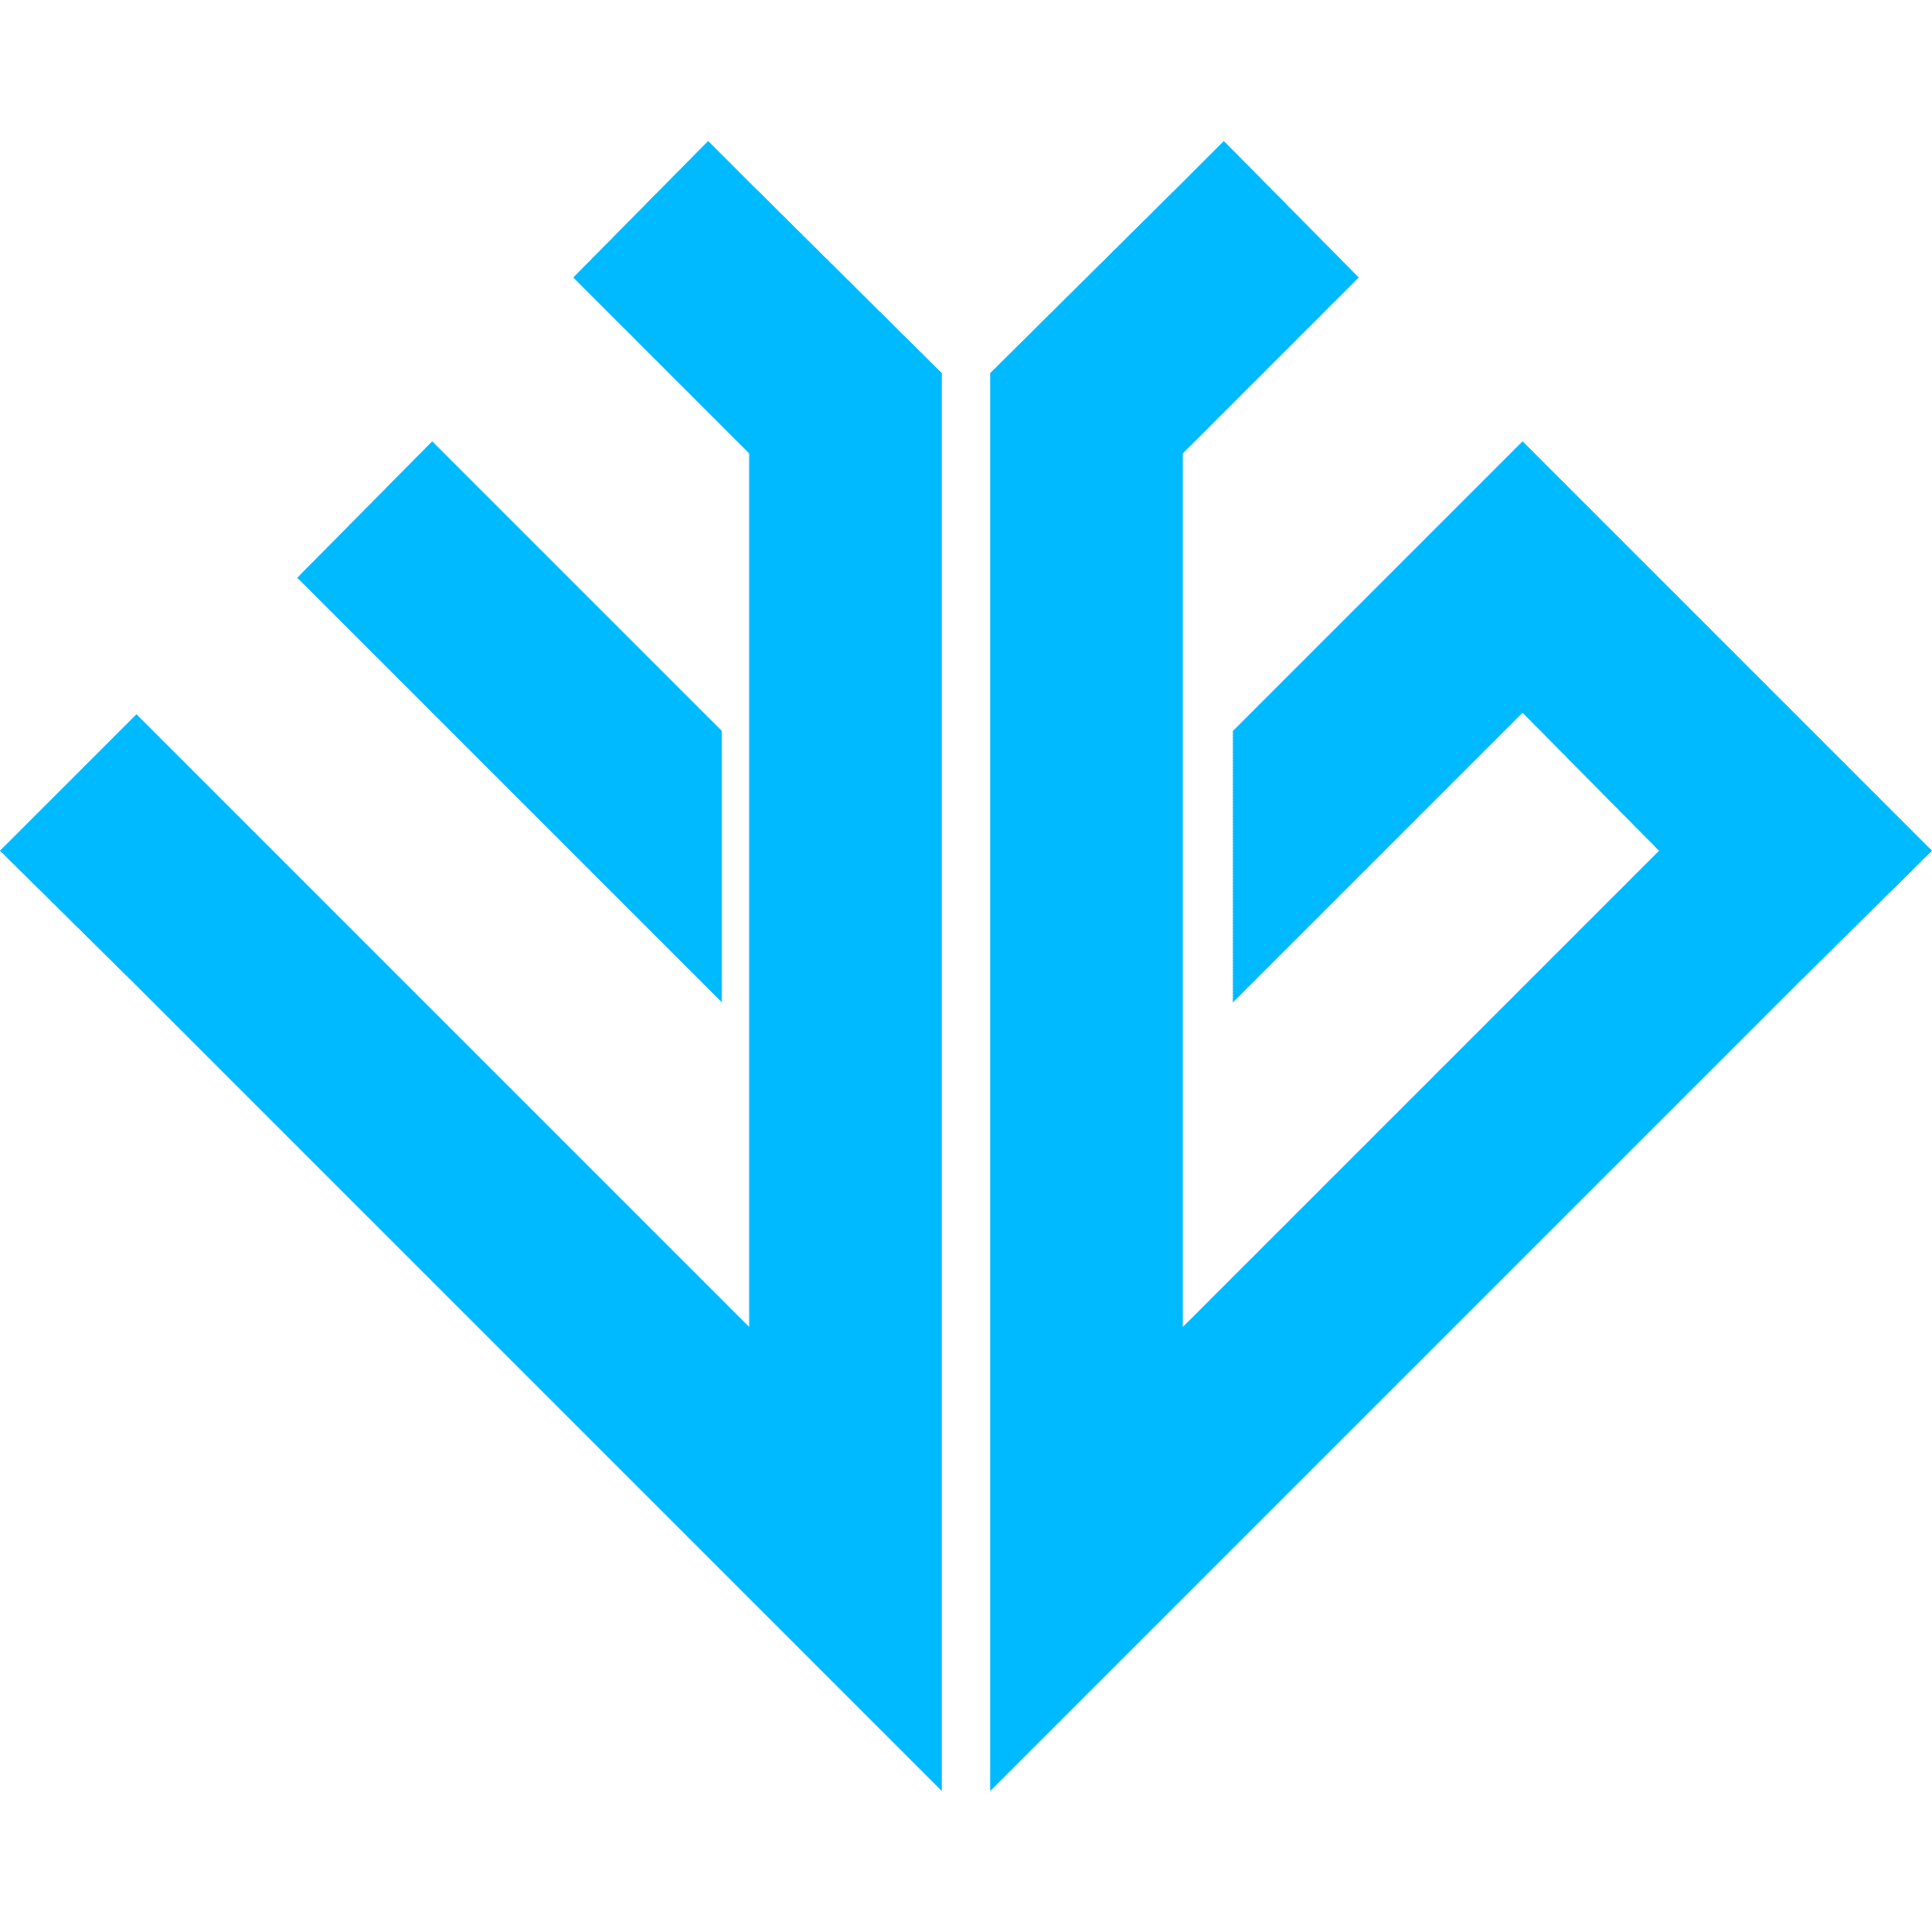 ELONGATE logo in png format